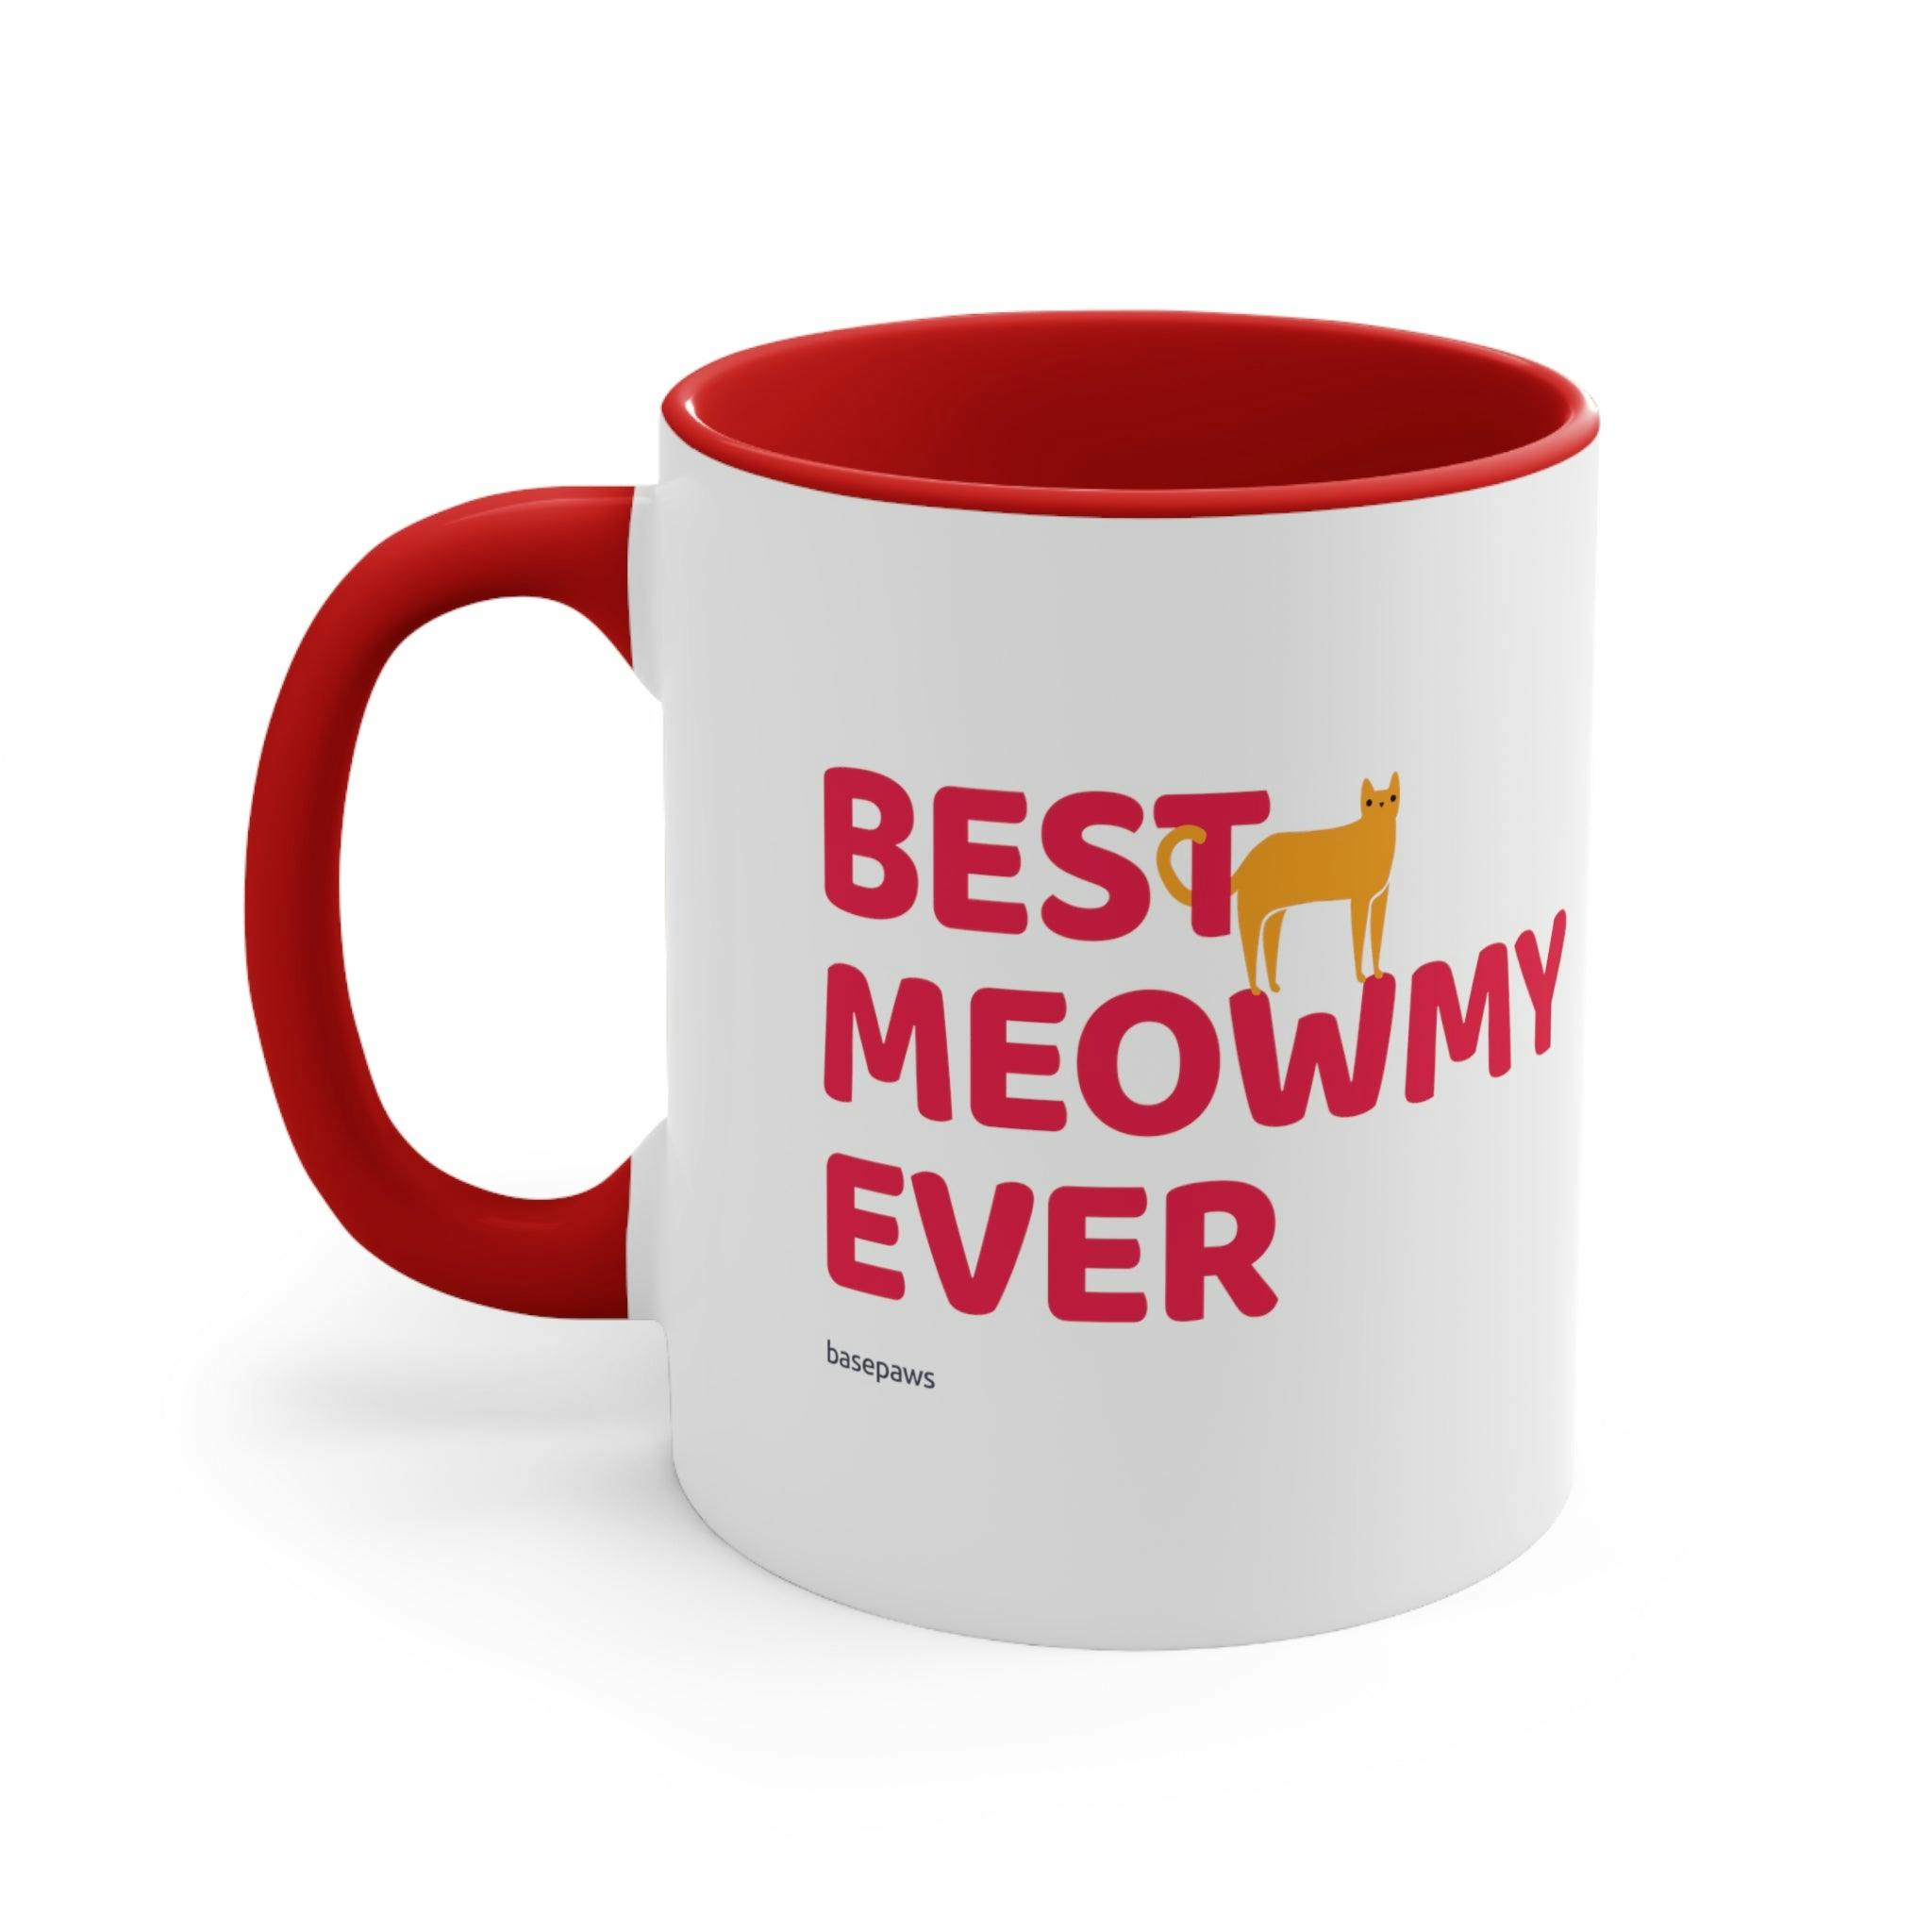 Best Meowmy Mug